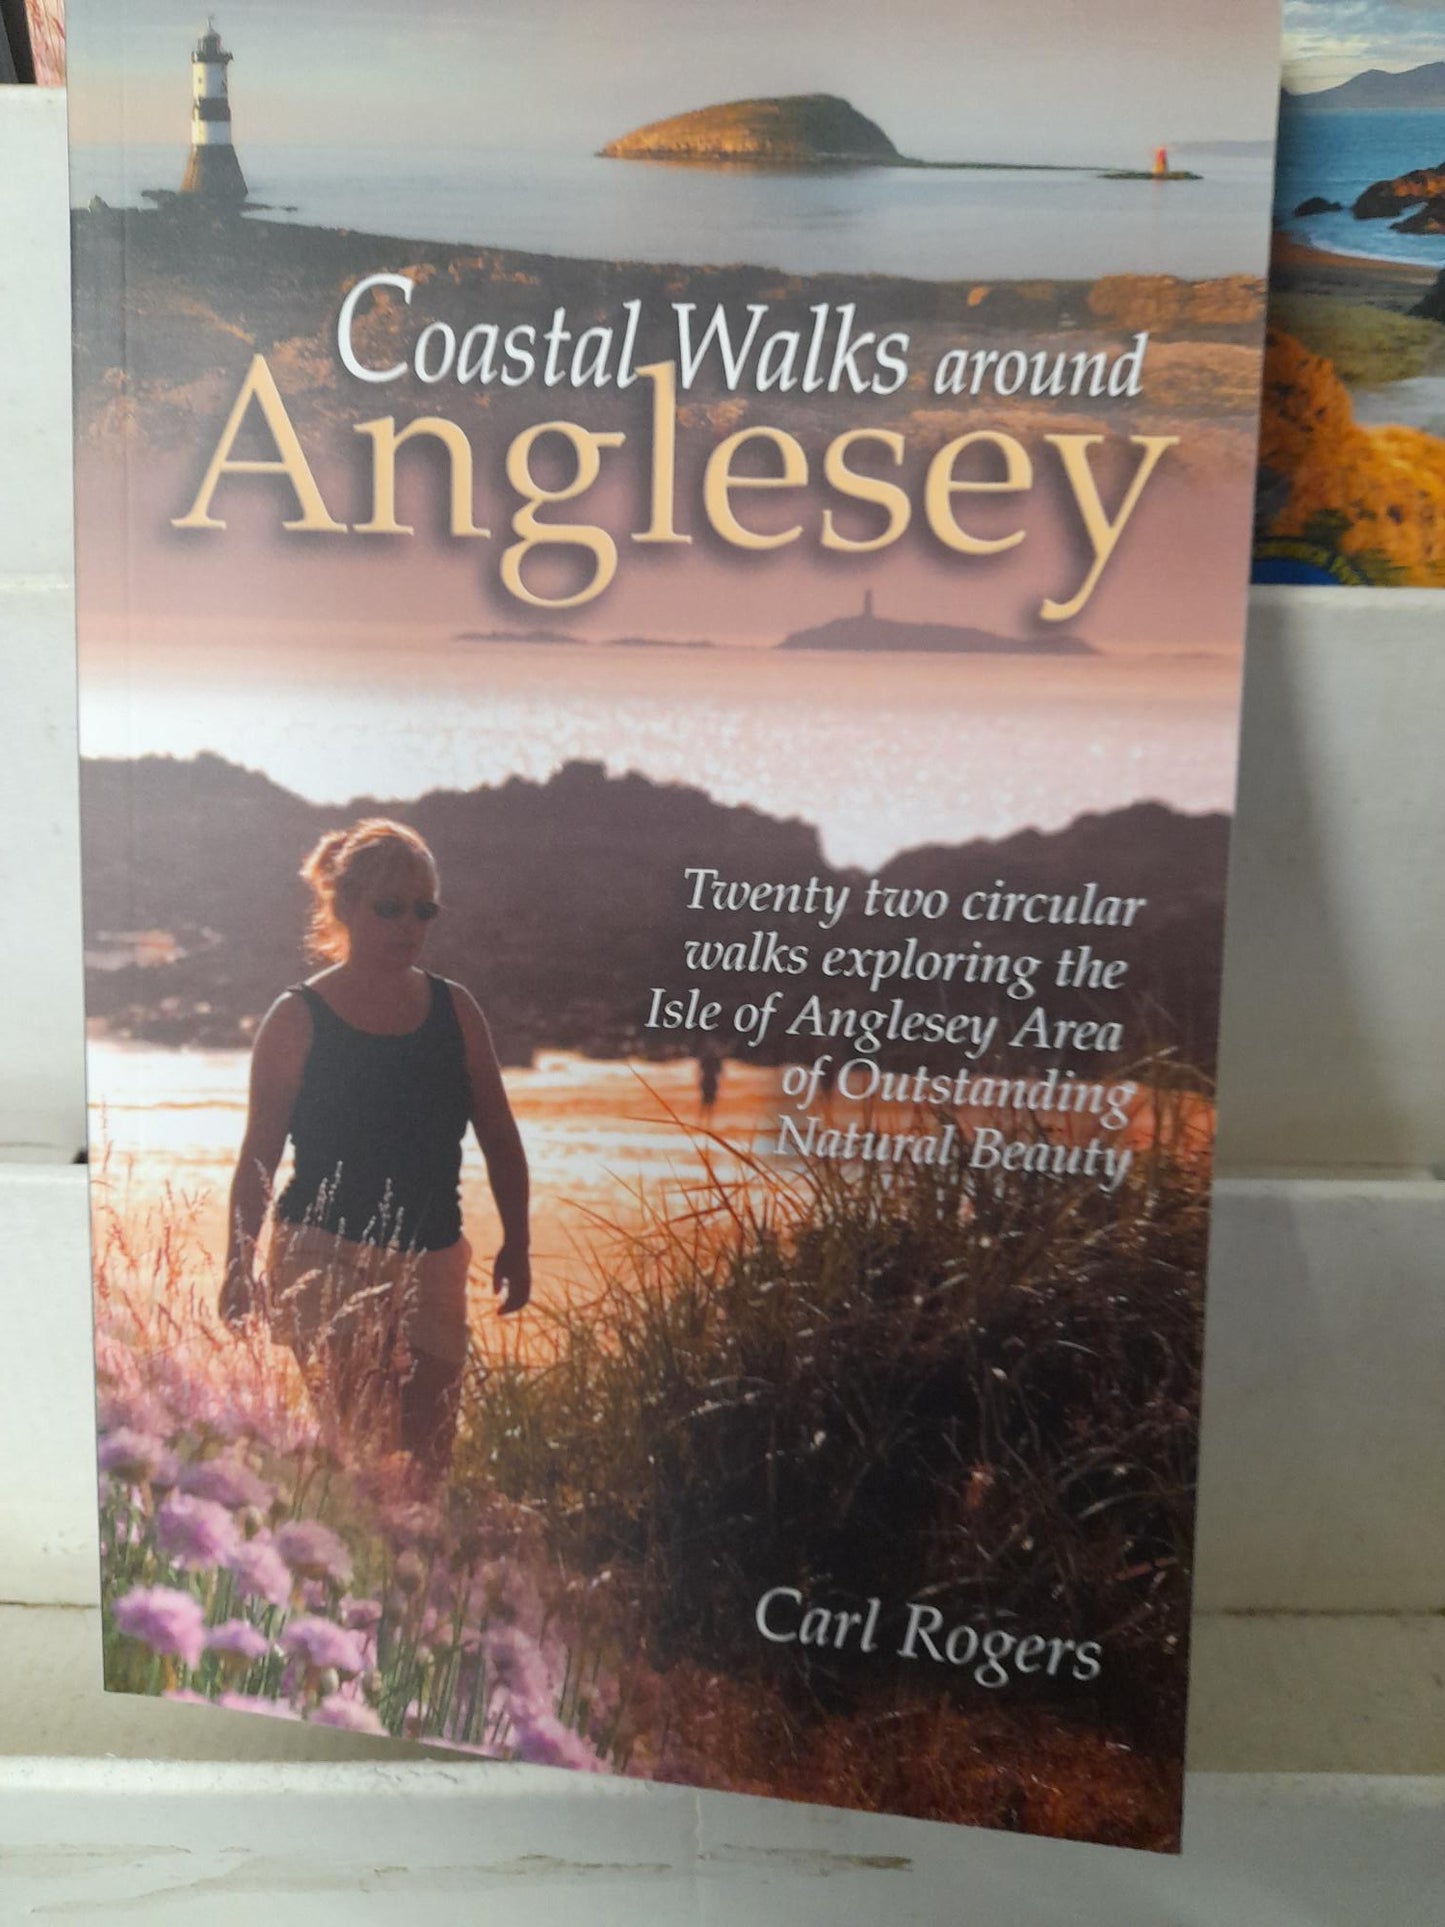 Coastal walks around Anglesey by Carl Rogers